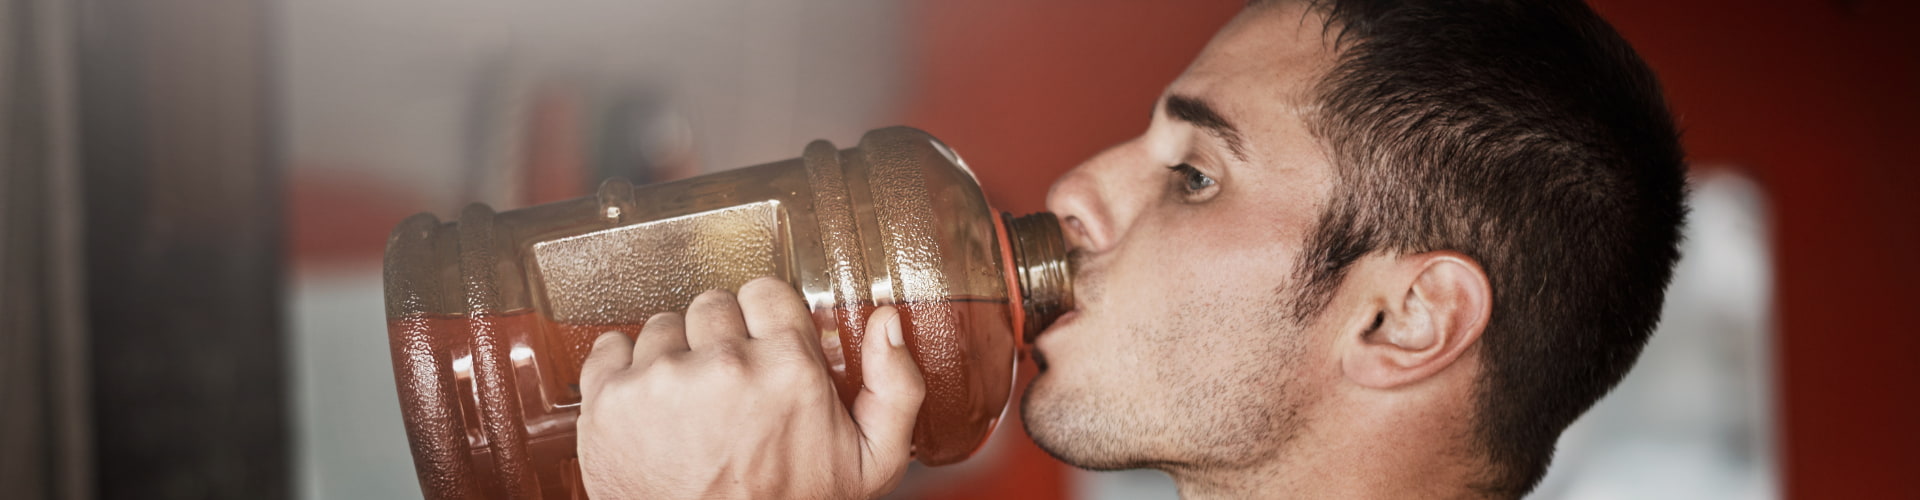 The Best Pre-Workout Energy Drink: Kratom vs Popular Alternatives